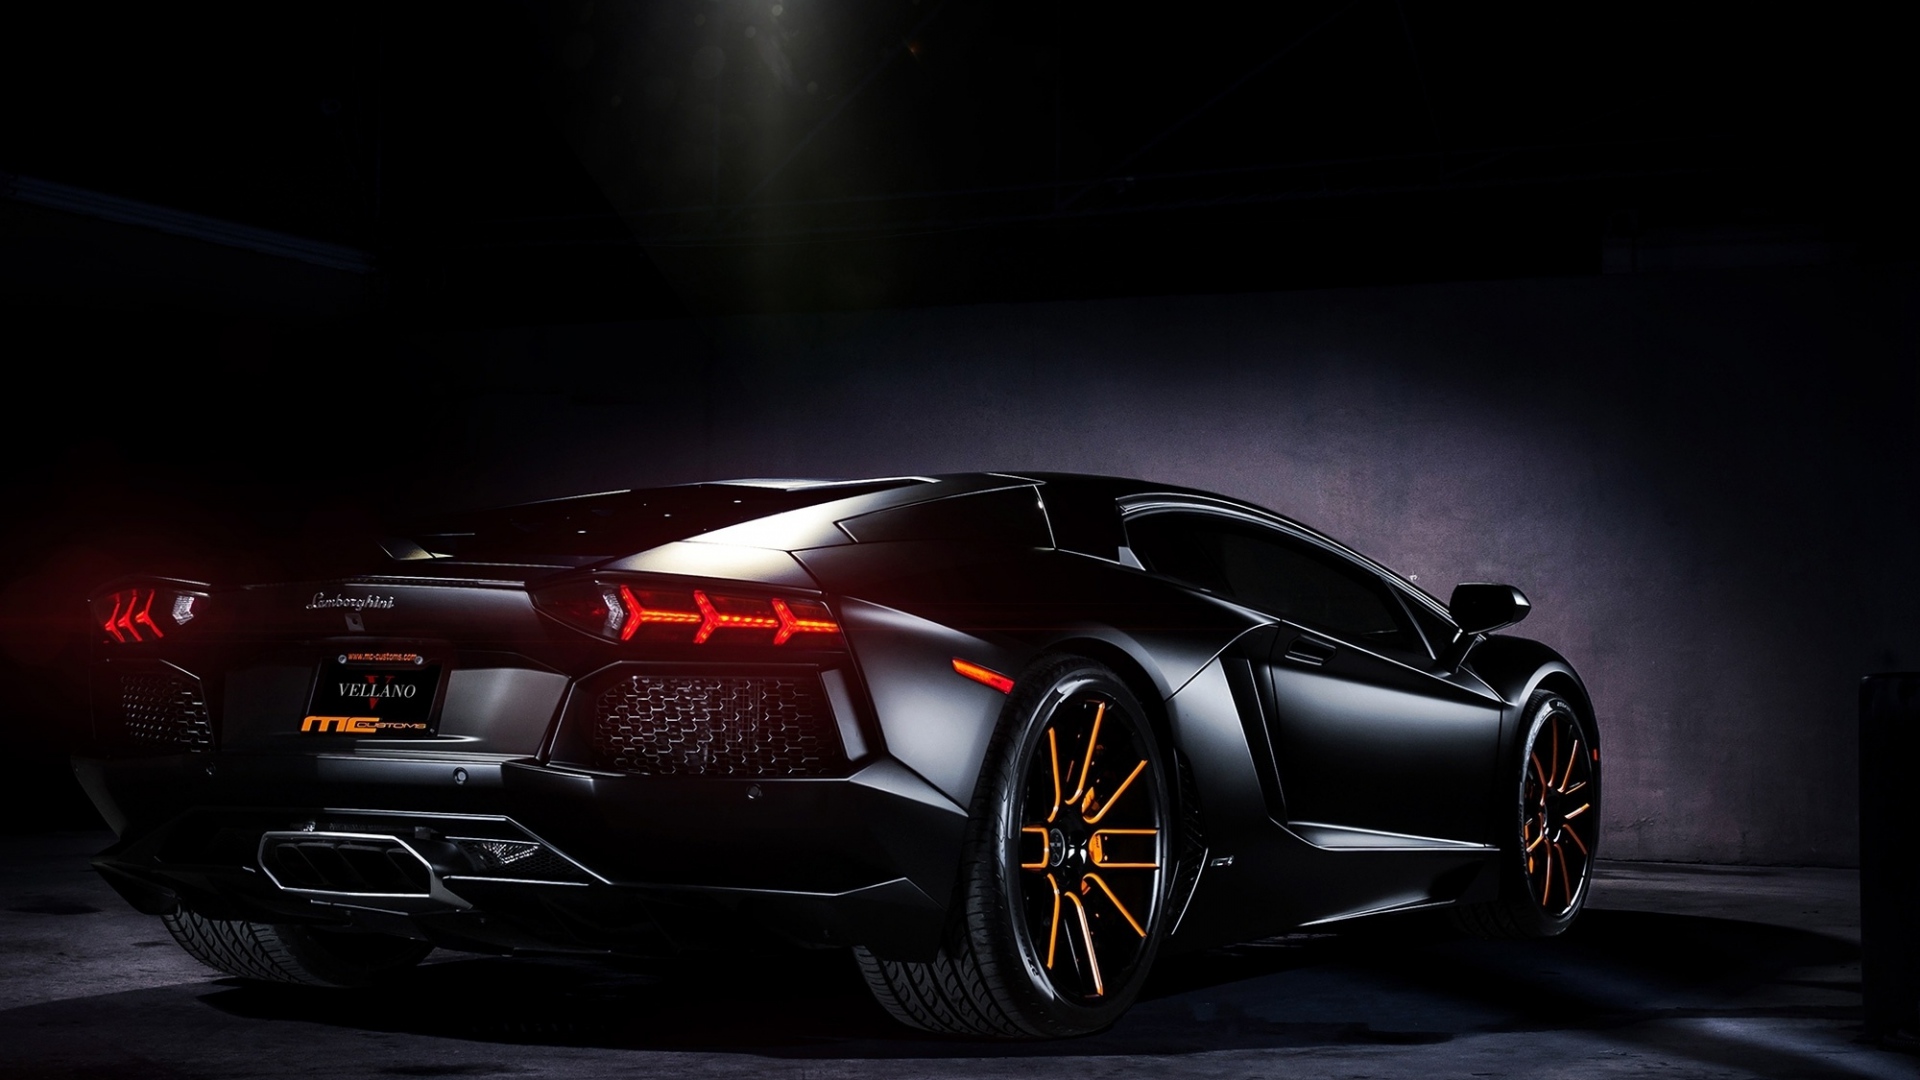 Lamborghini Hd 1080P Wallpapers